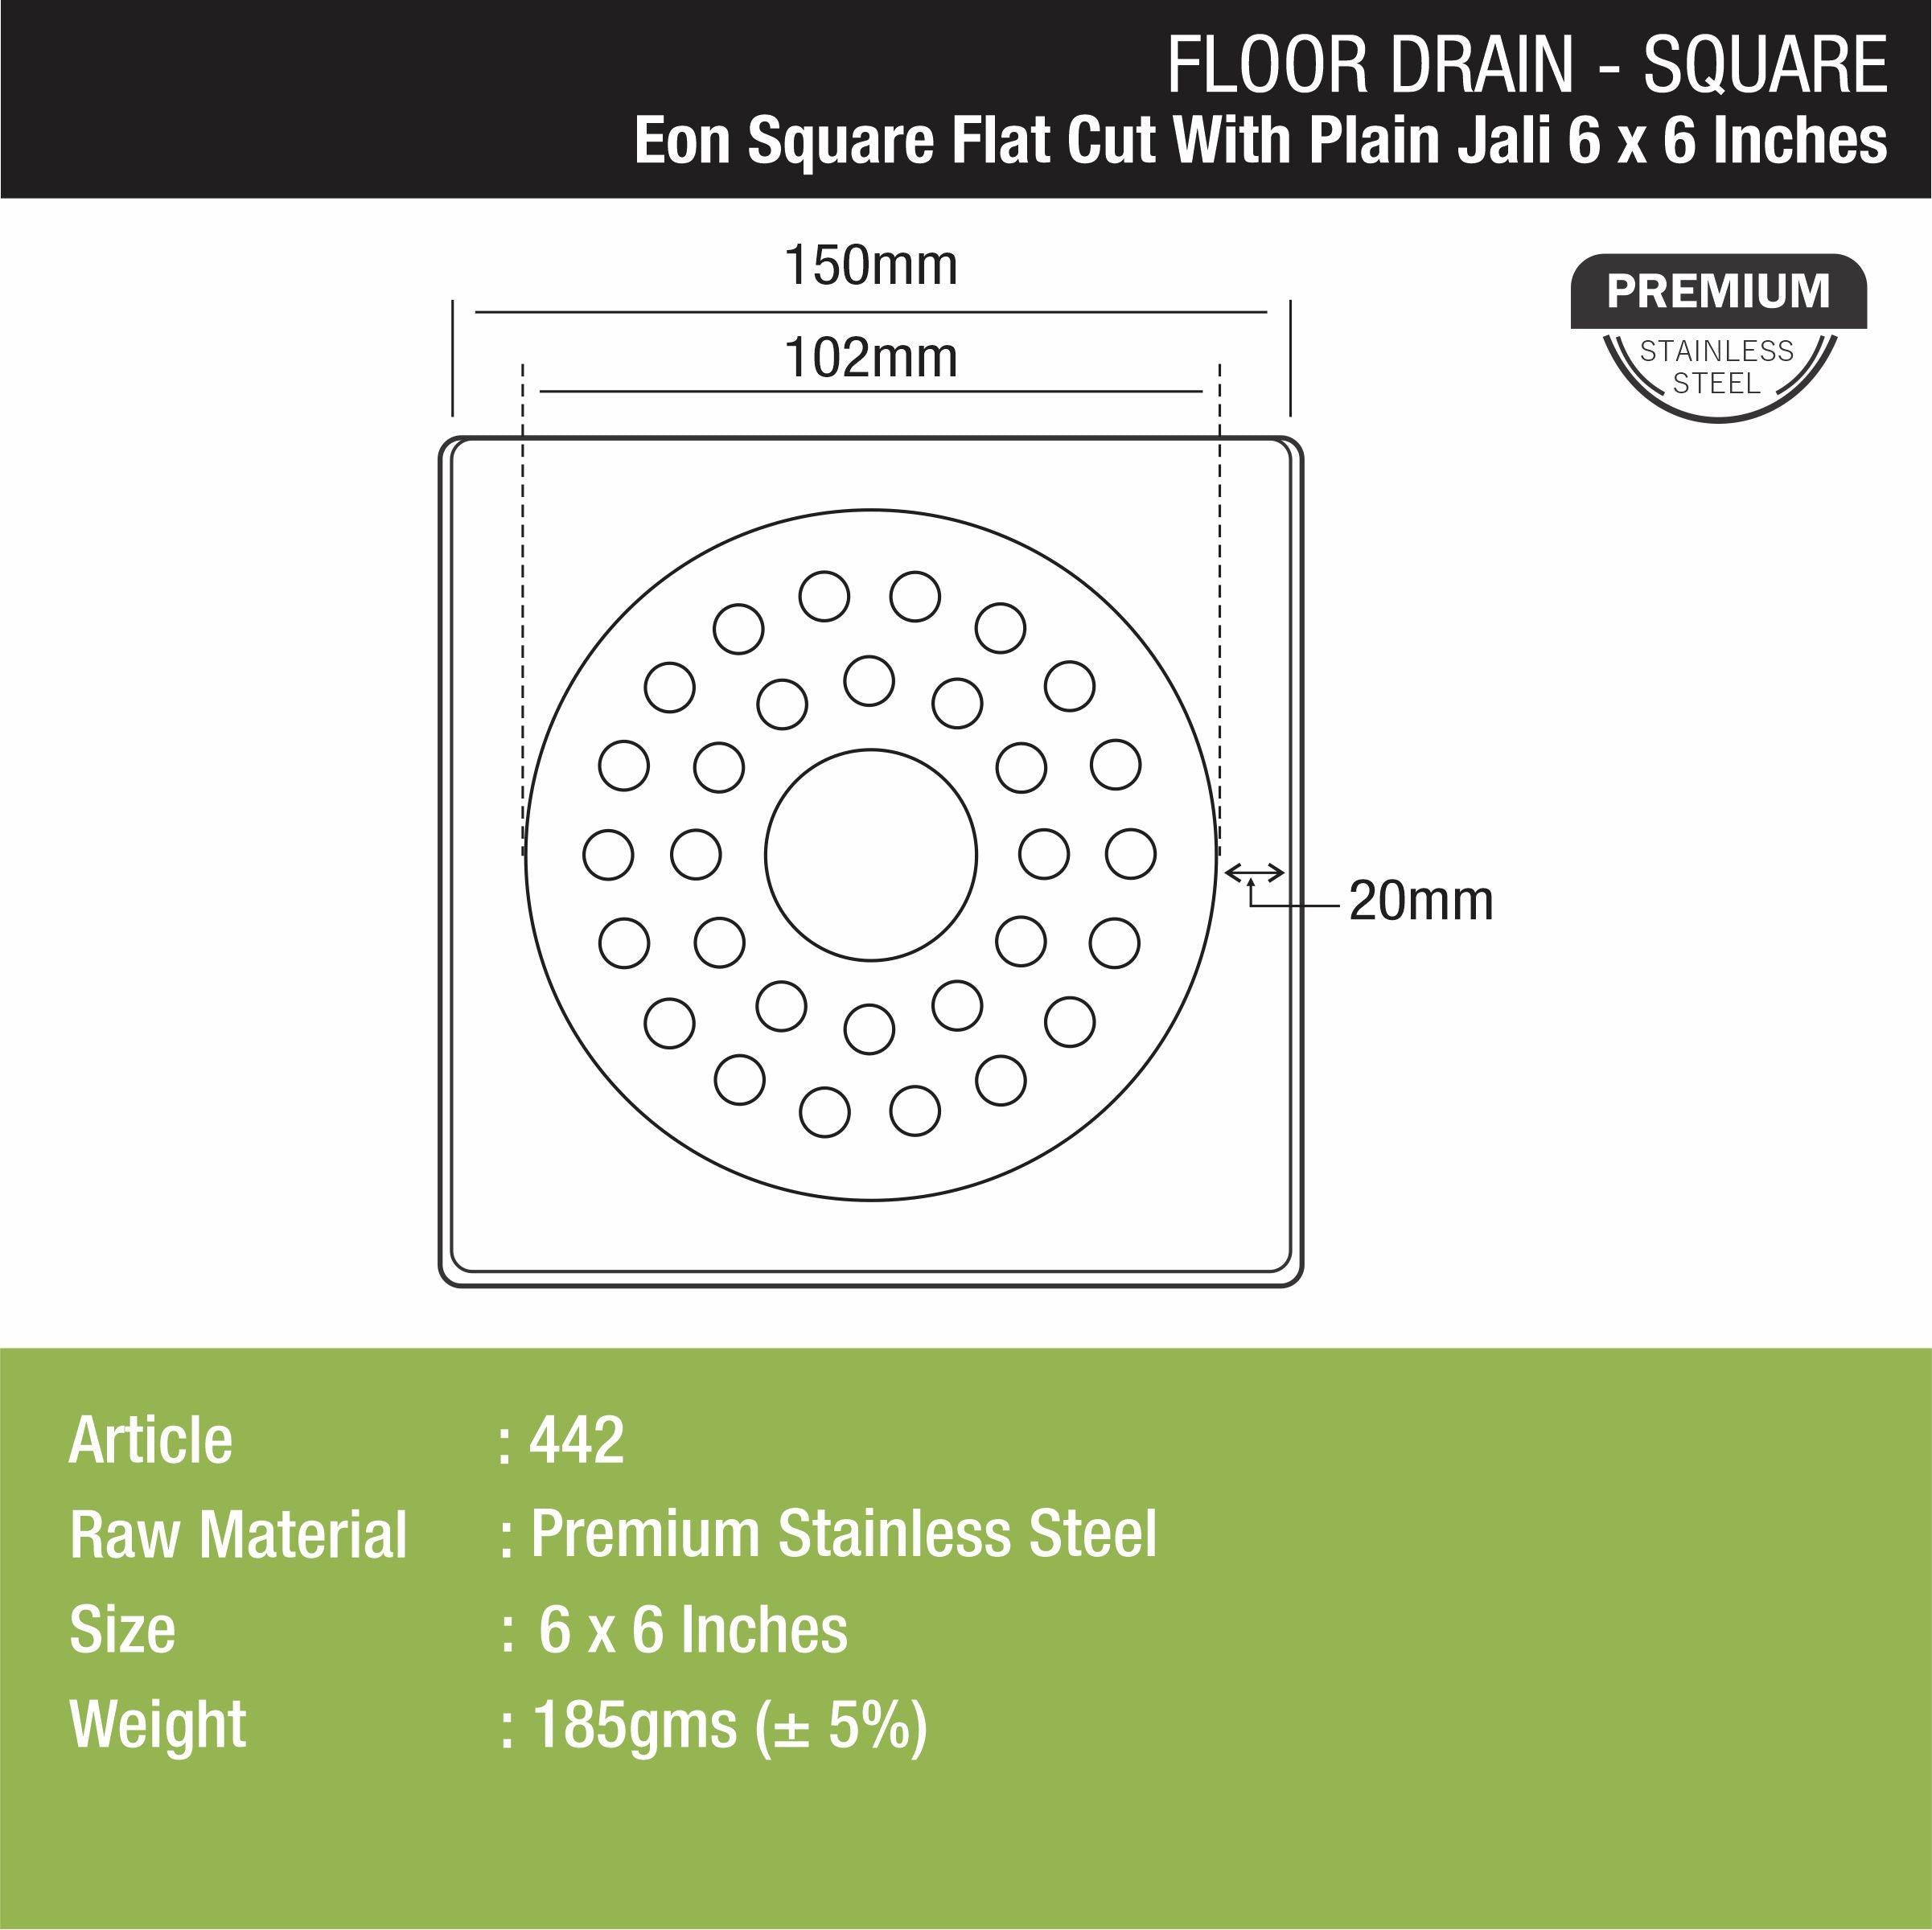 Eon Square Flat Cut Floor Drain with Plain Jali and Hole (6 x 6 Inches) - LIPKA - Lipka Home